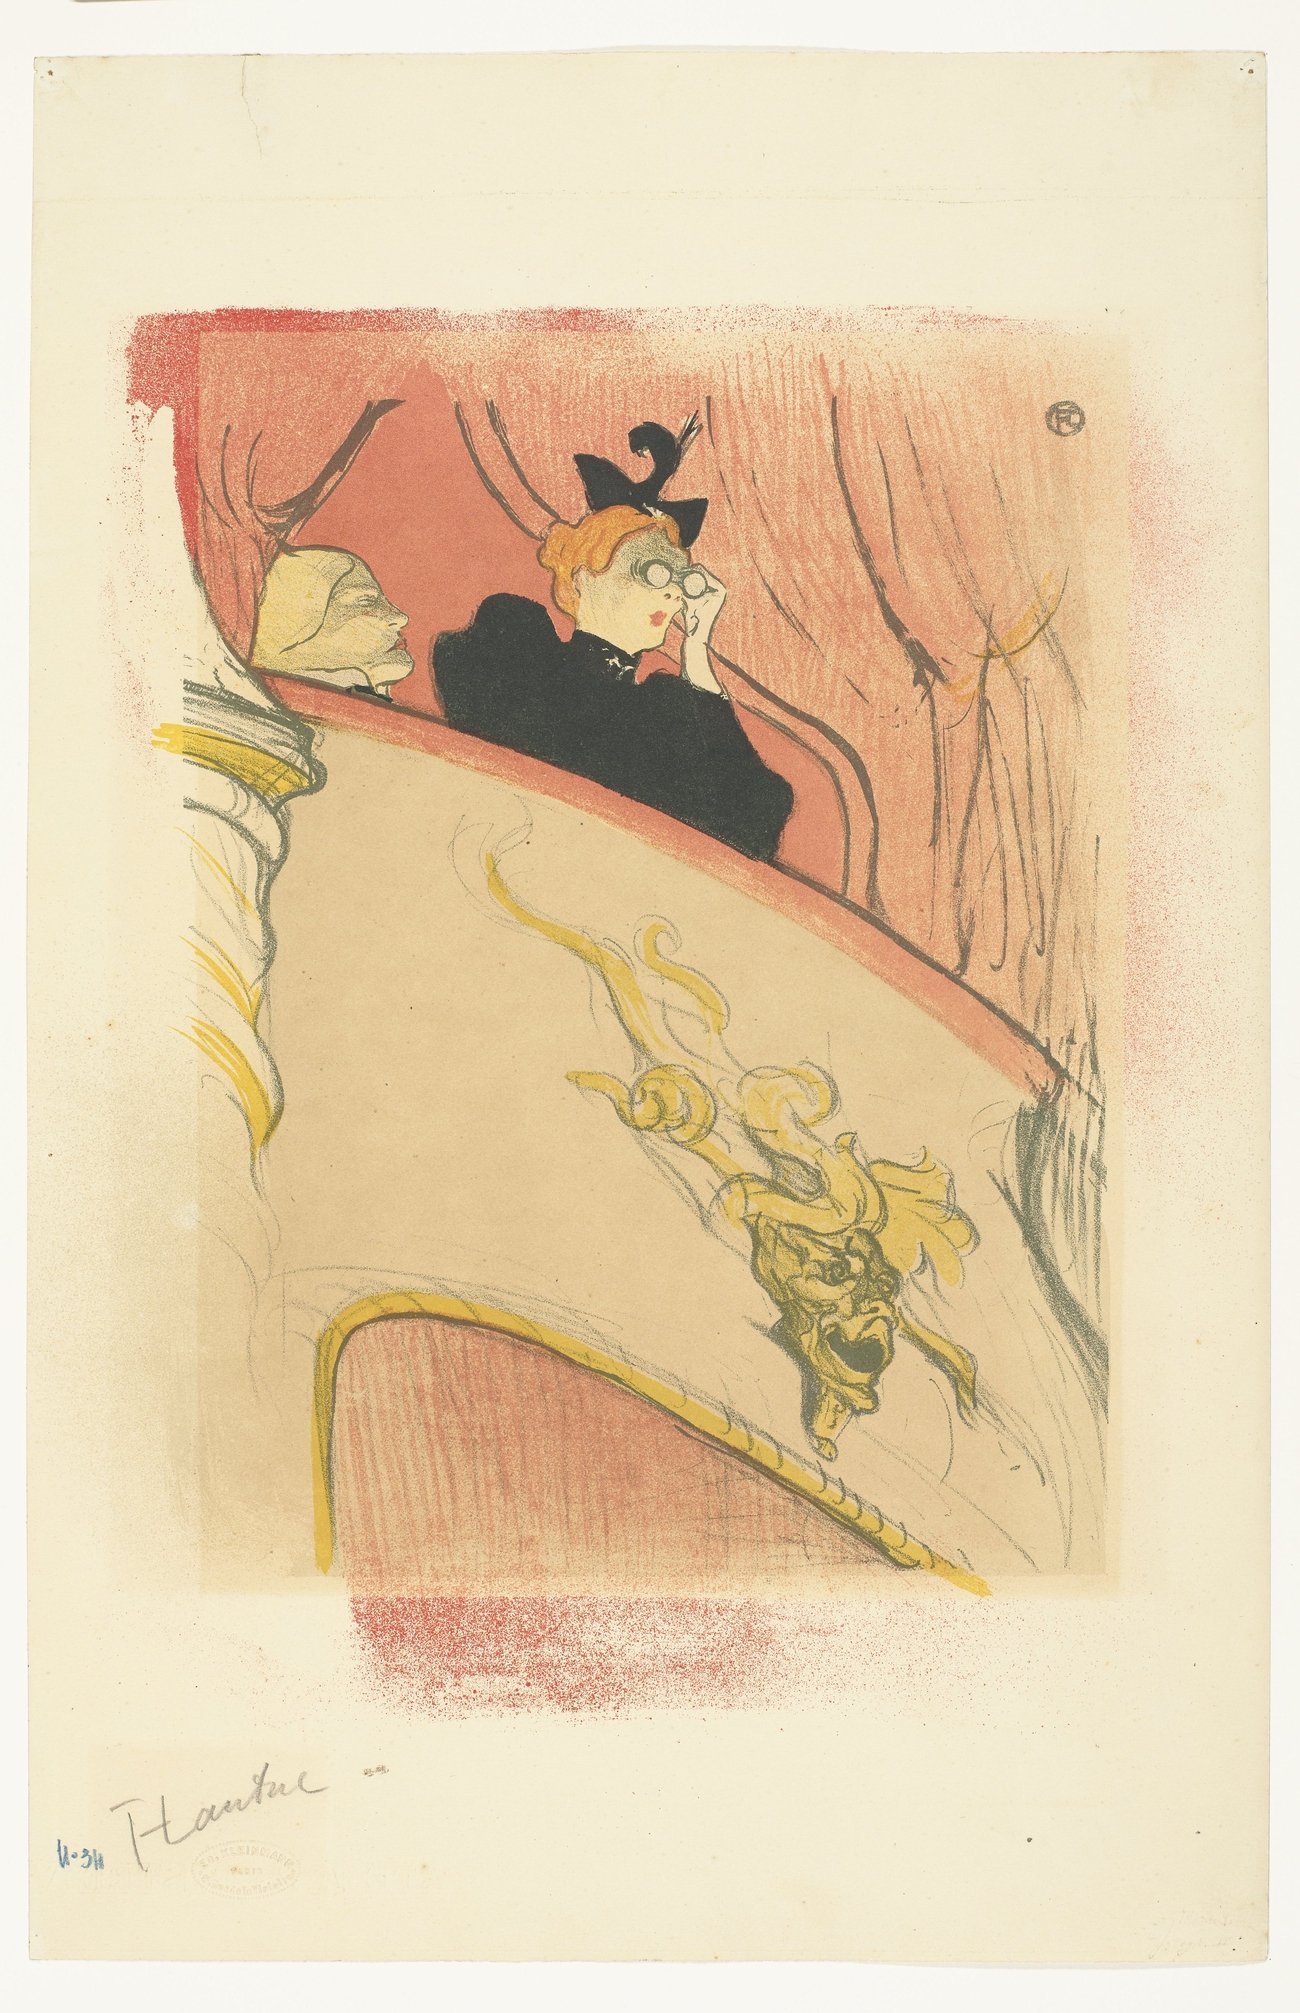 ‘La Loge au Mascaron doré’ - The Box with the Gilded Mask (1894)